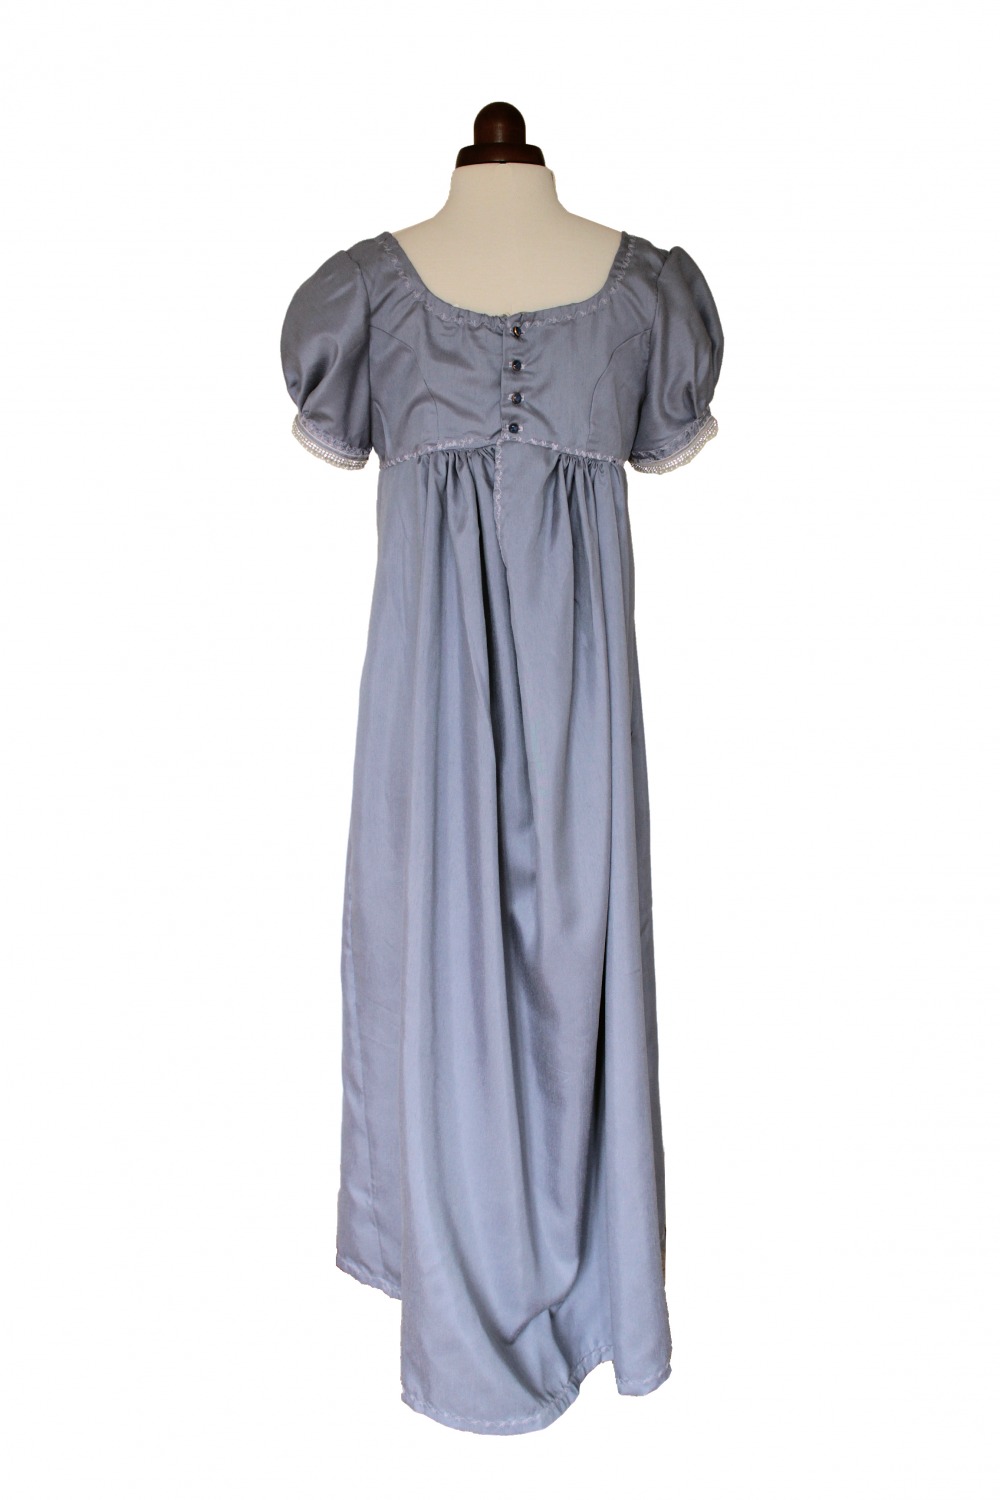 Ladies 19th Century Jane Austen Regency Evening Ball Gown Size 12 - 14 Image